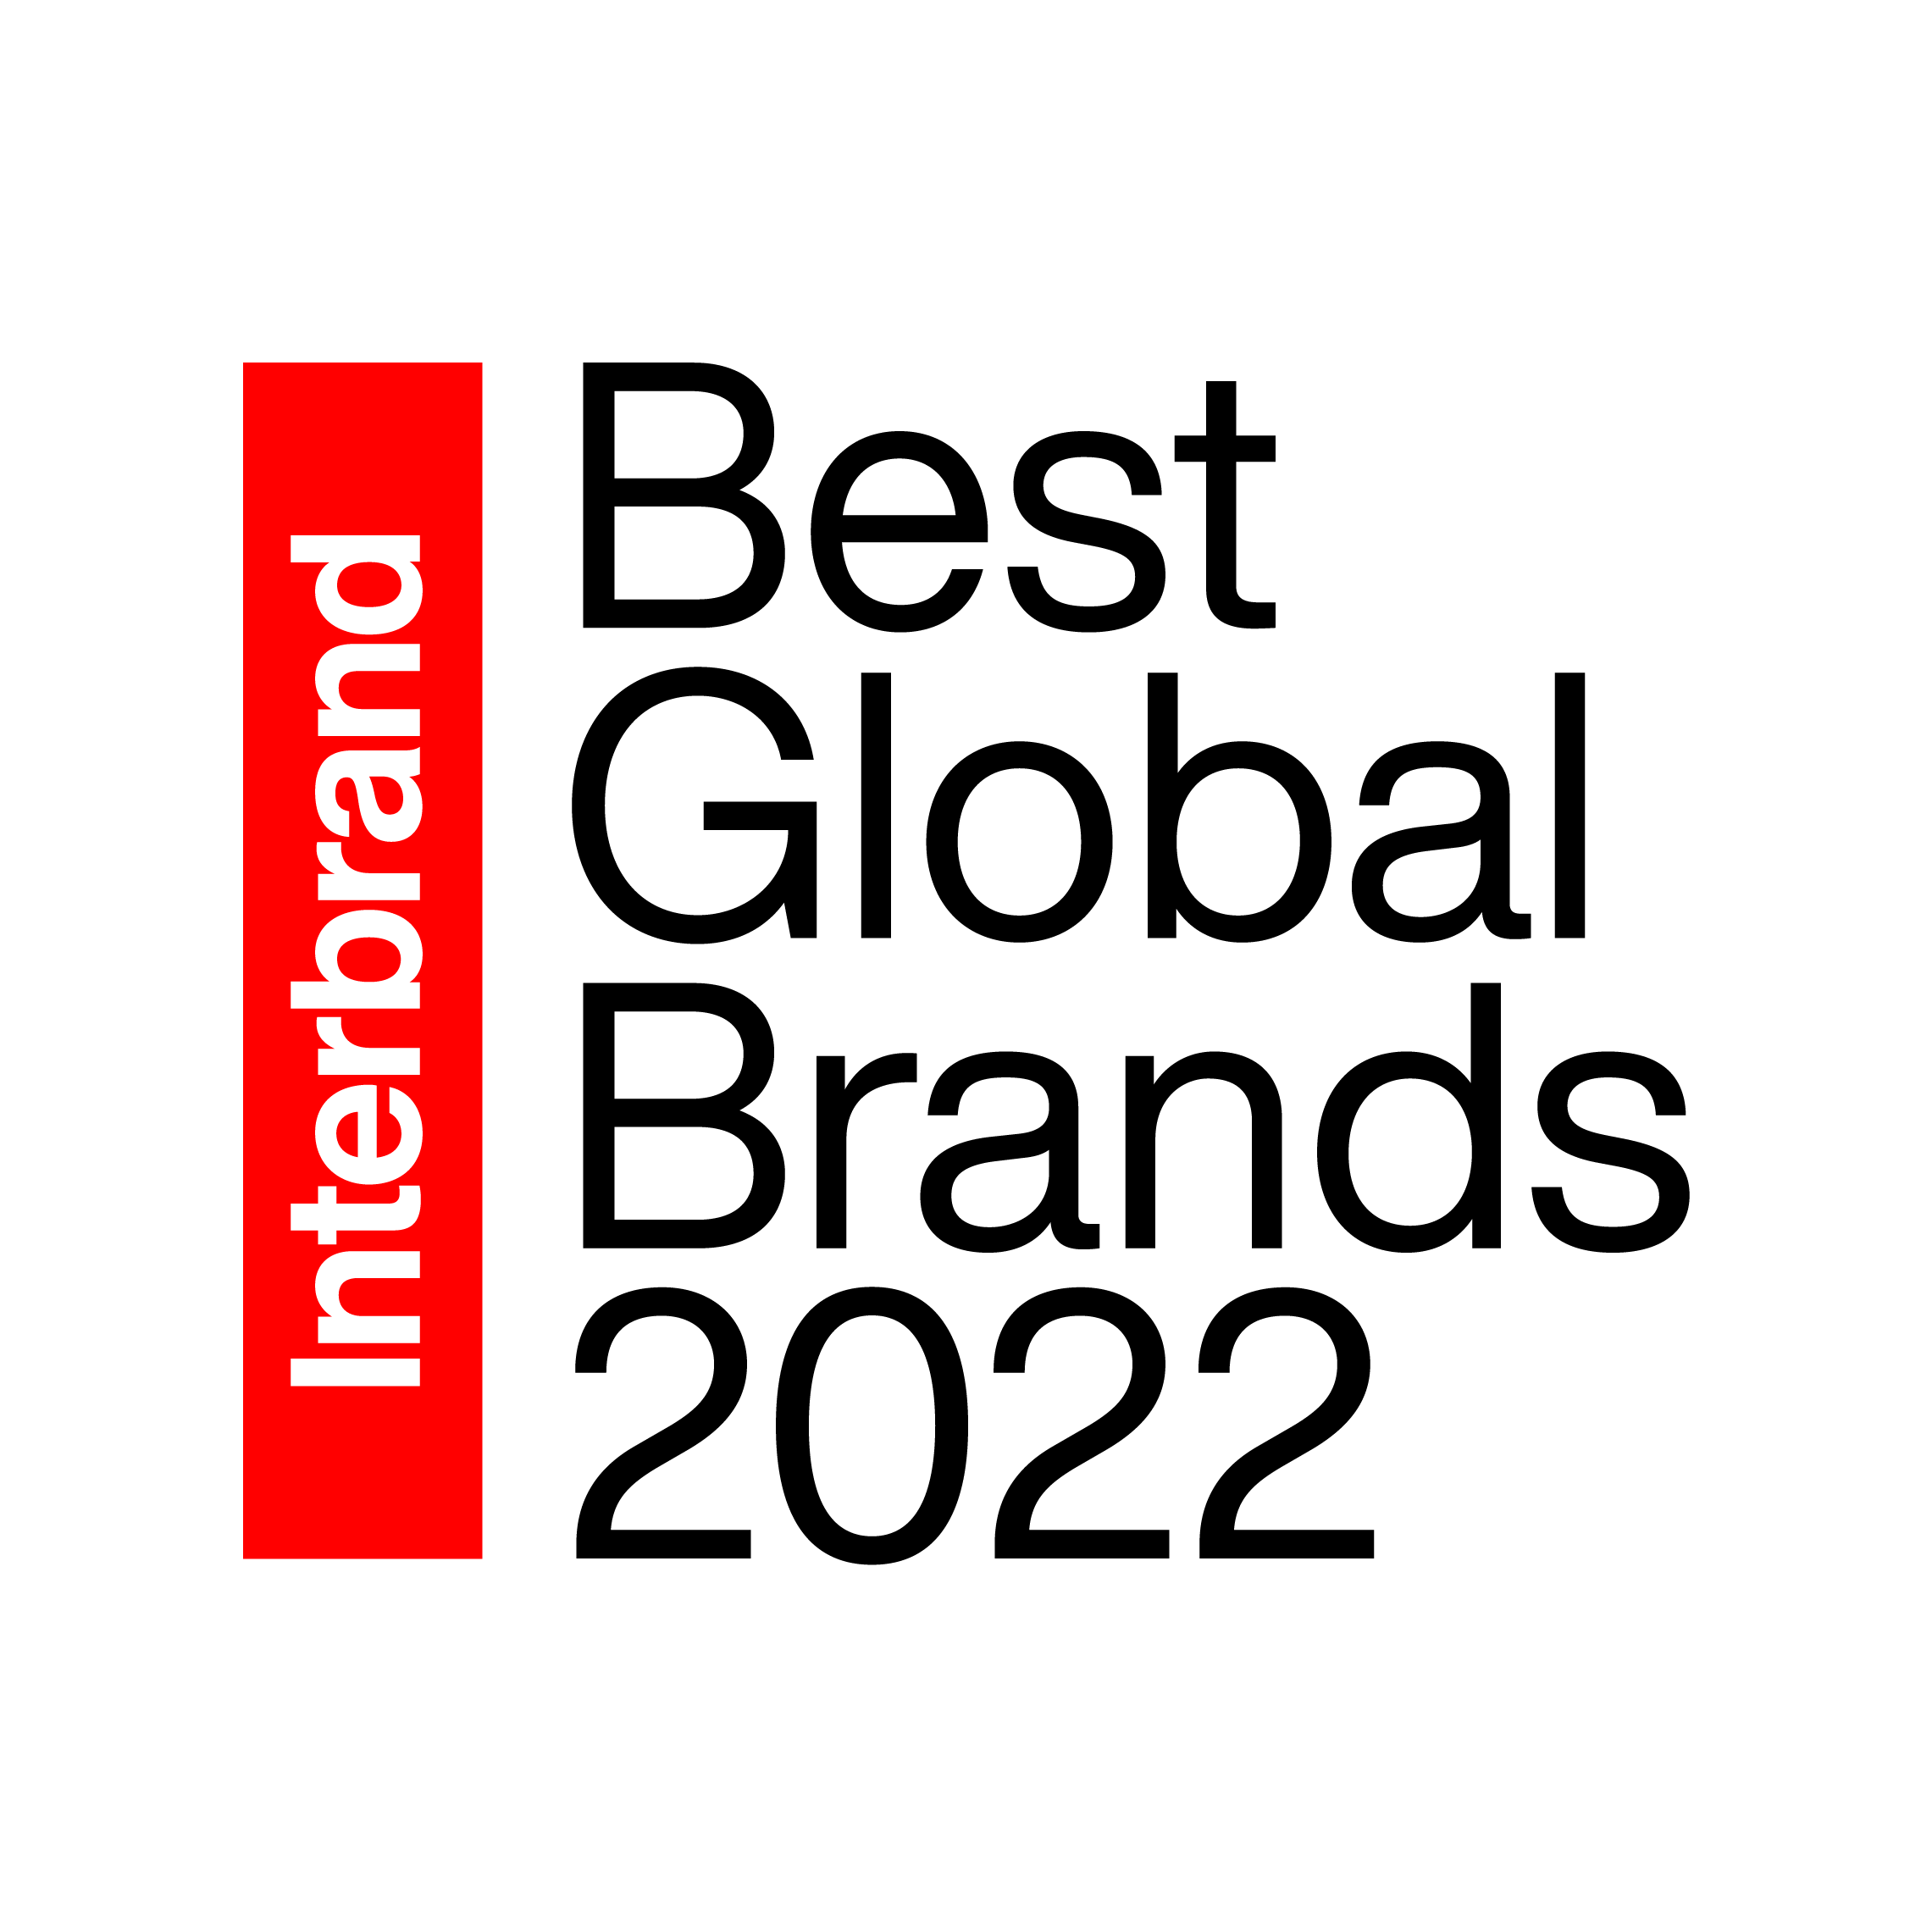 Louis Vuitton: brand value worldwide 2016-2022